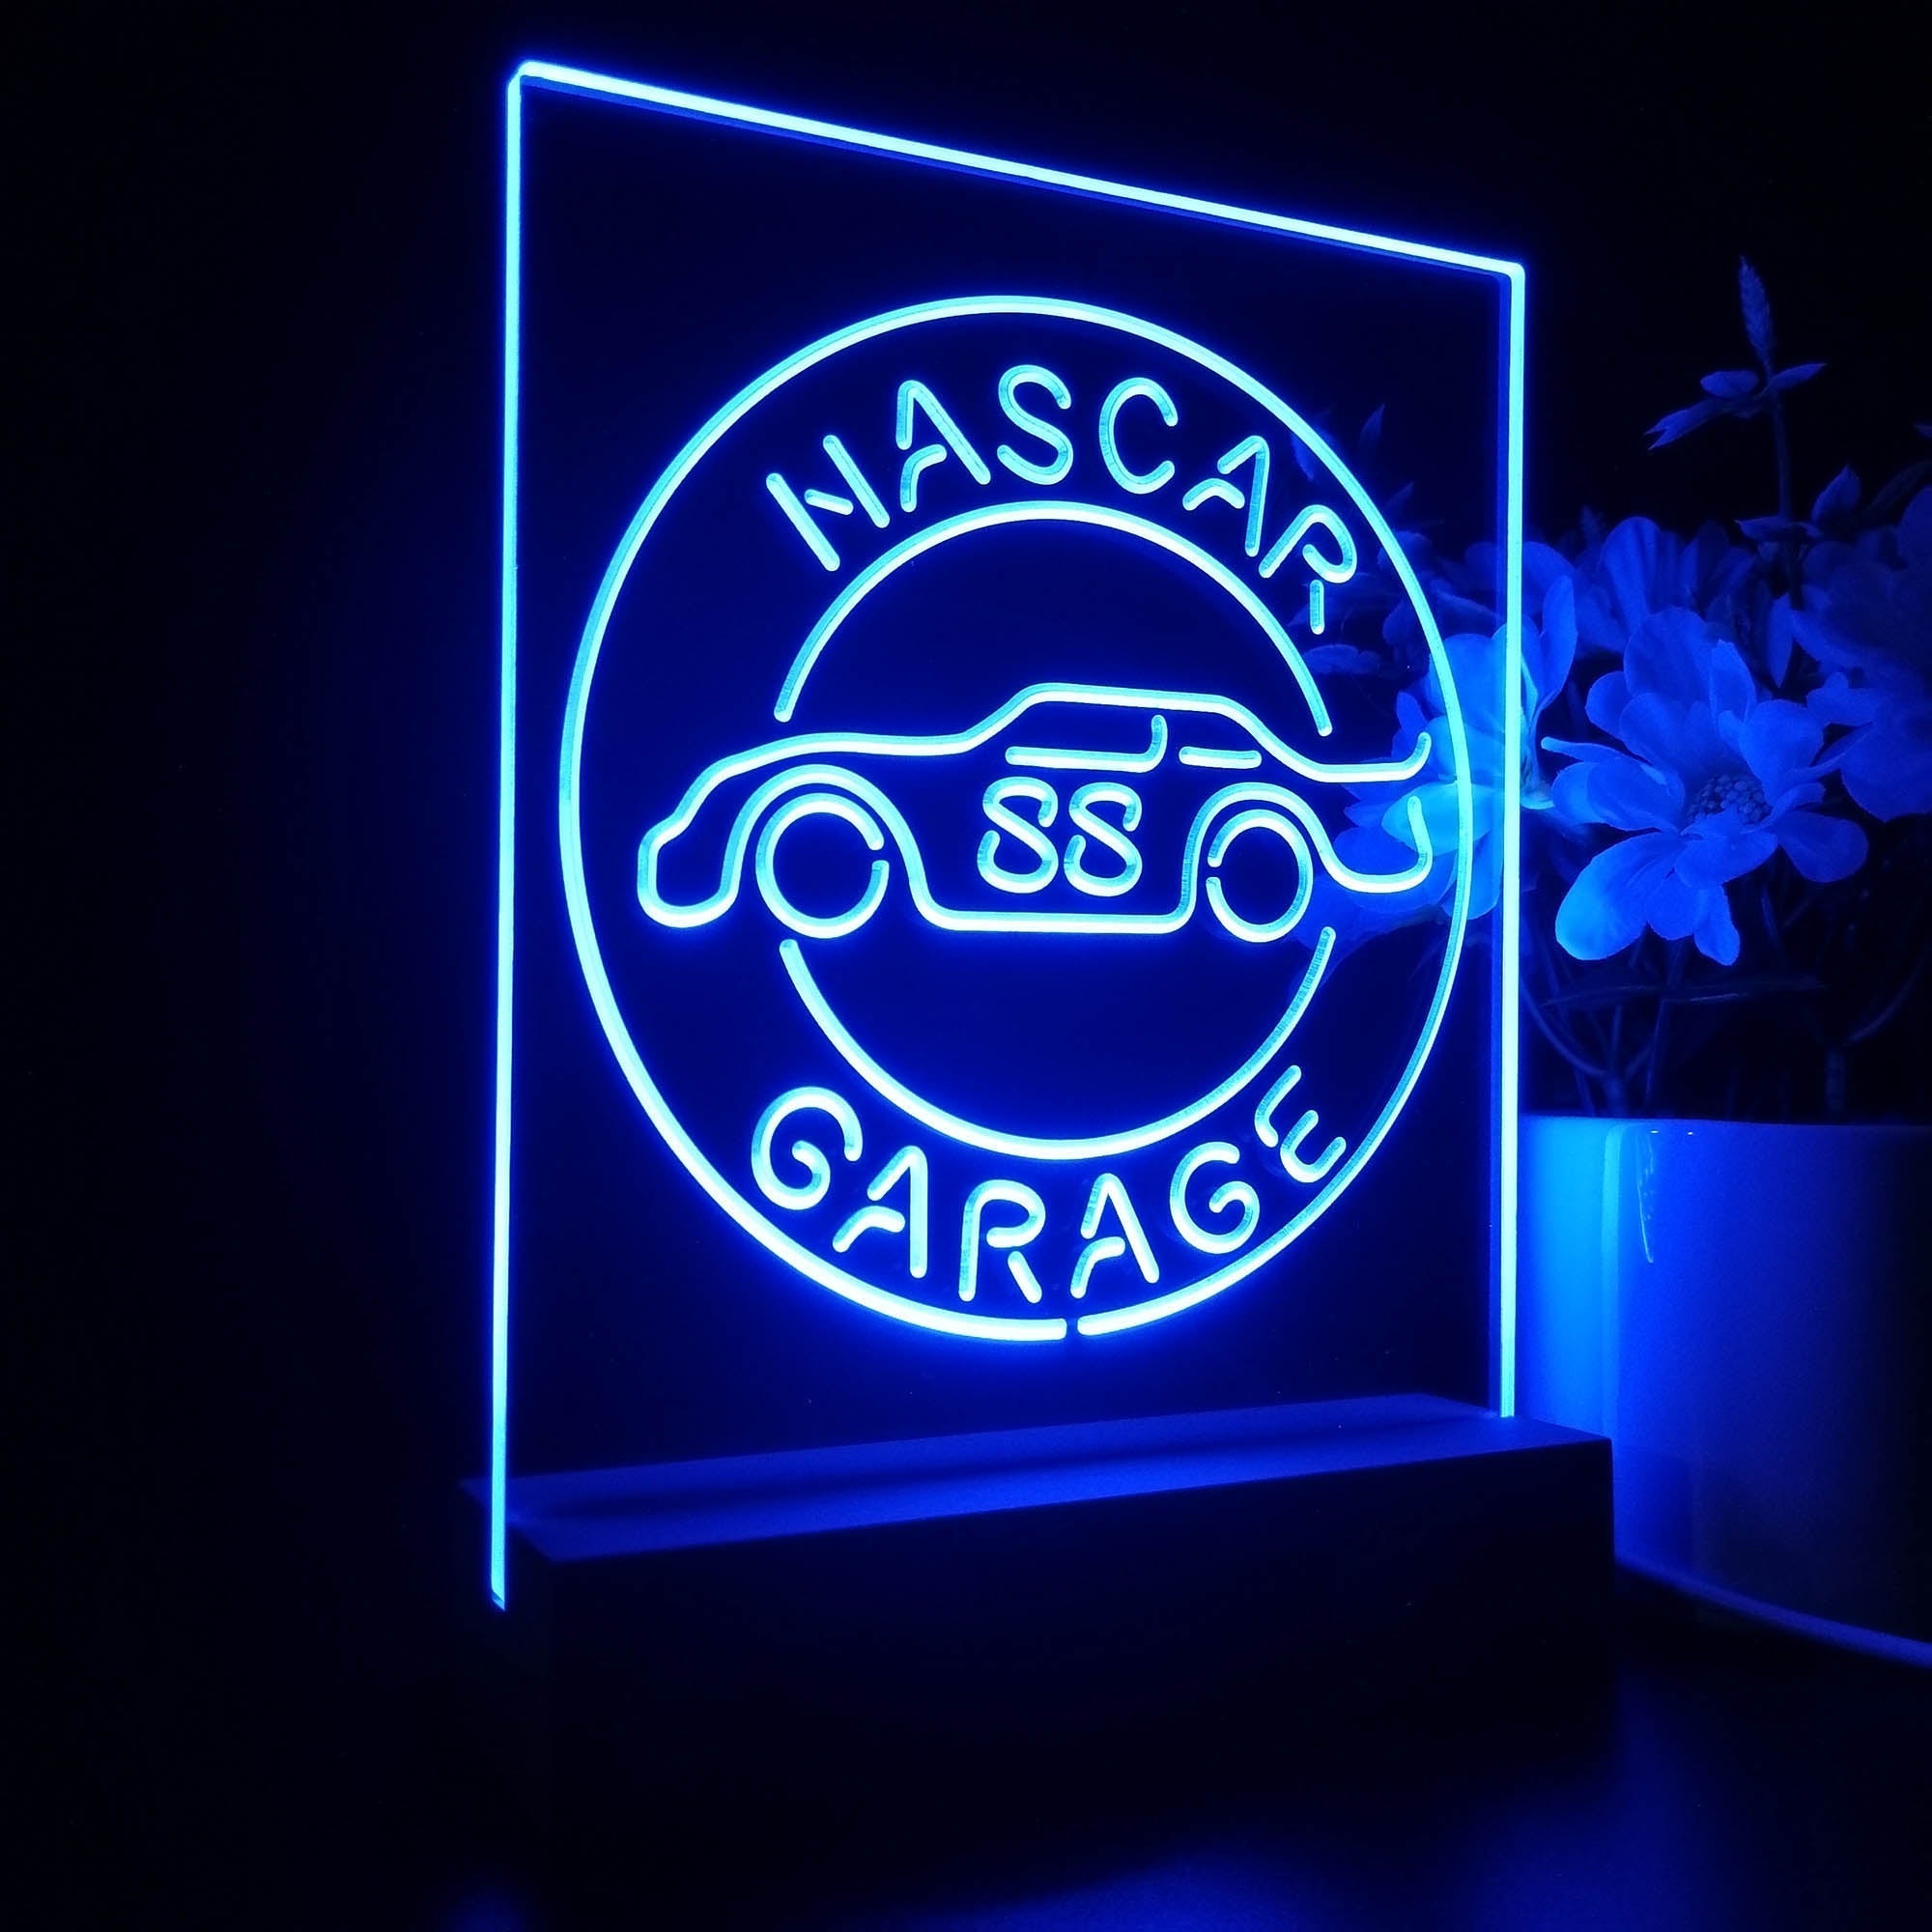 Nascar 88 Garage Dale Jr. Neon Sign Table Top Lamp